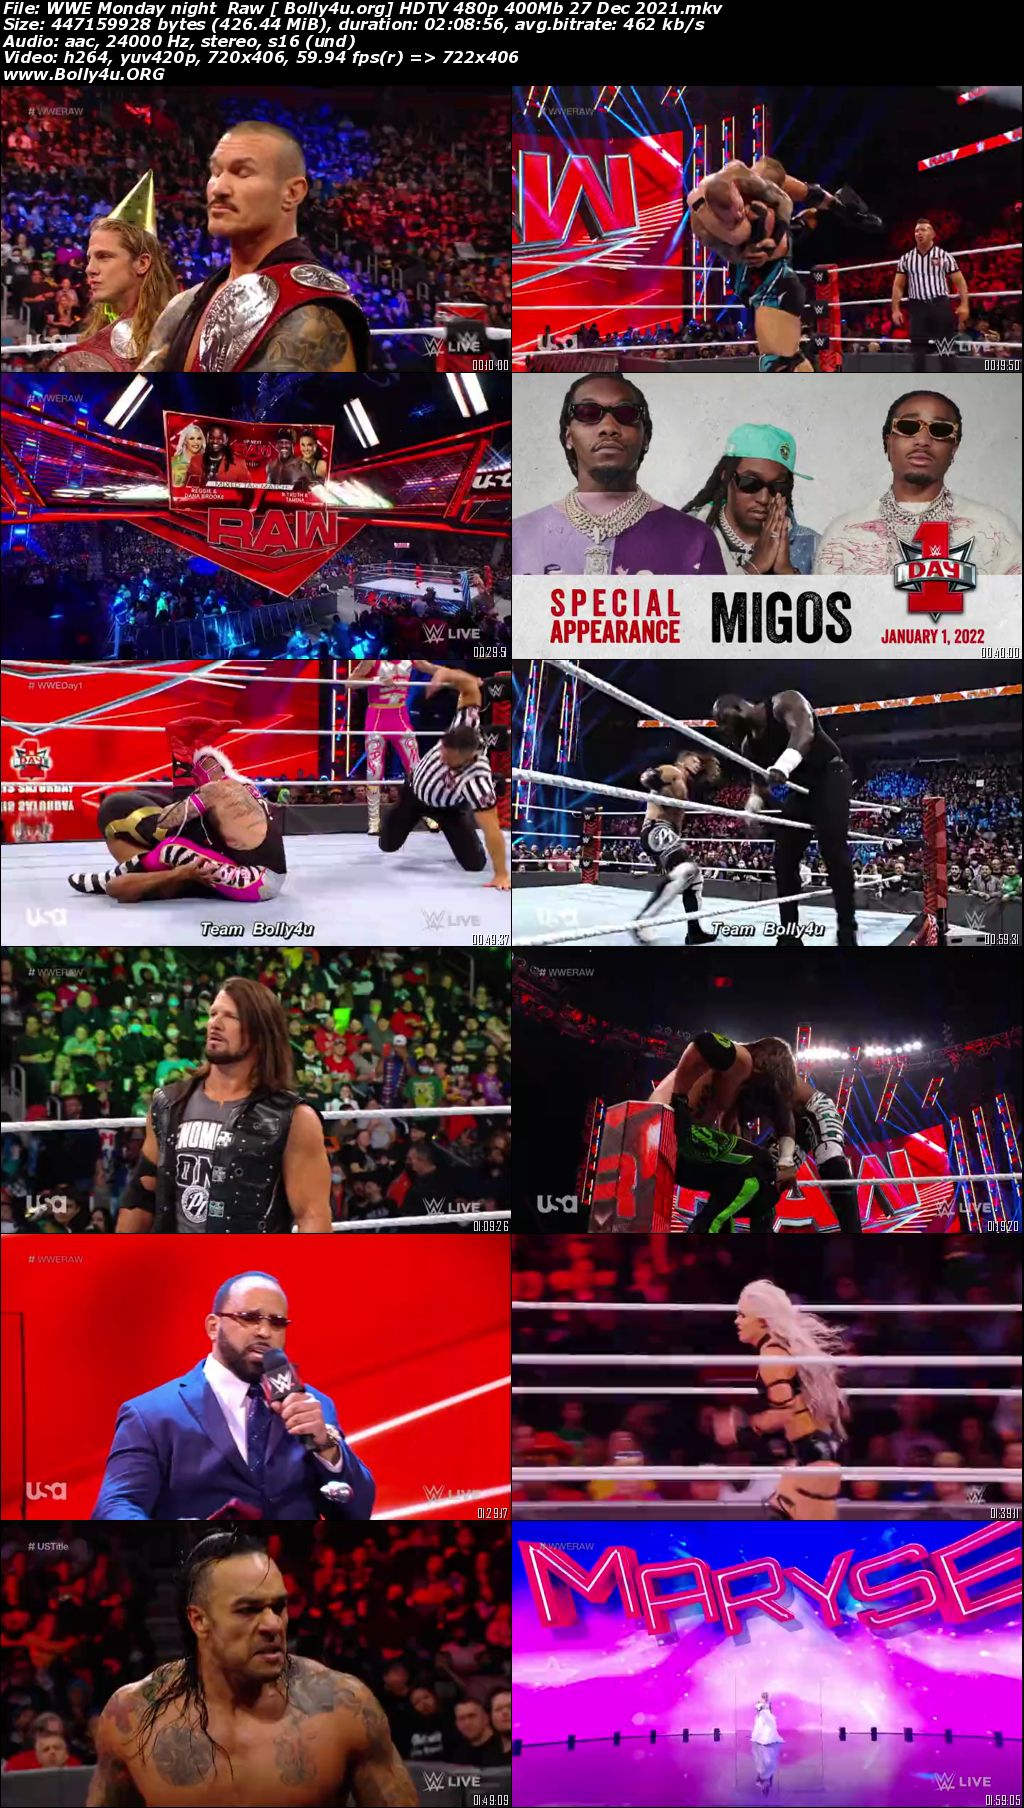 WWE Monday Night Raw HDTV 480p 400Mb 27 Dec 2021 Download